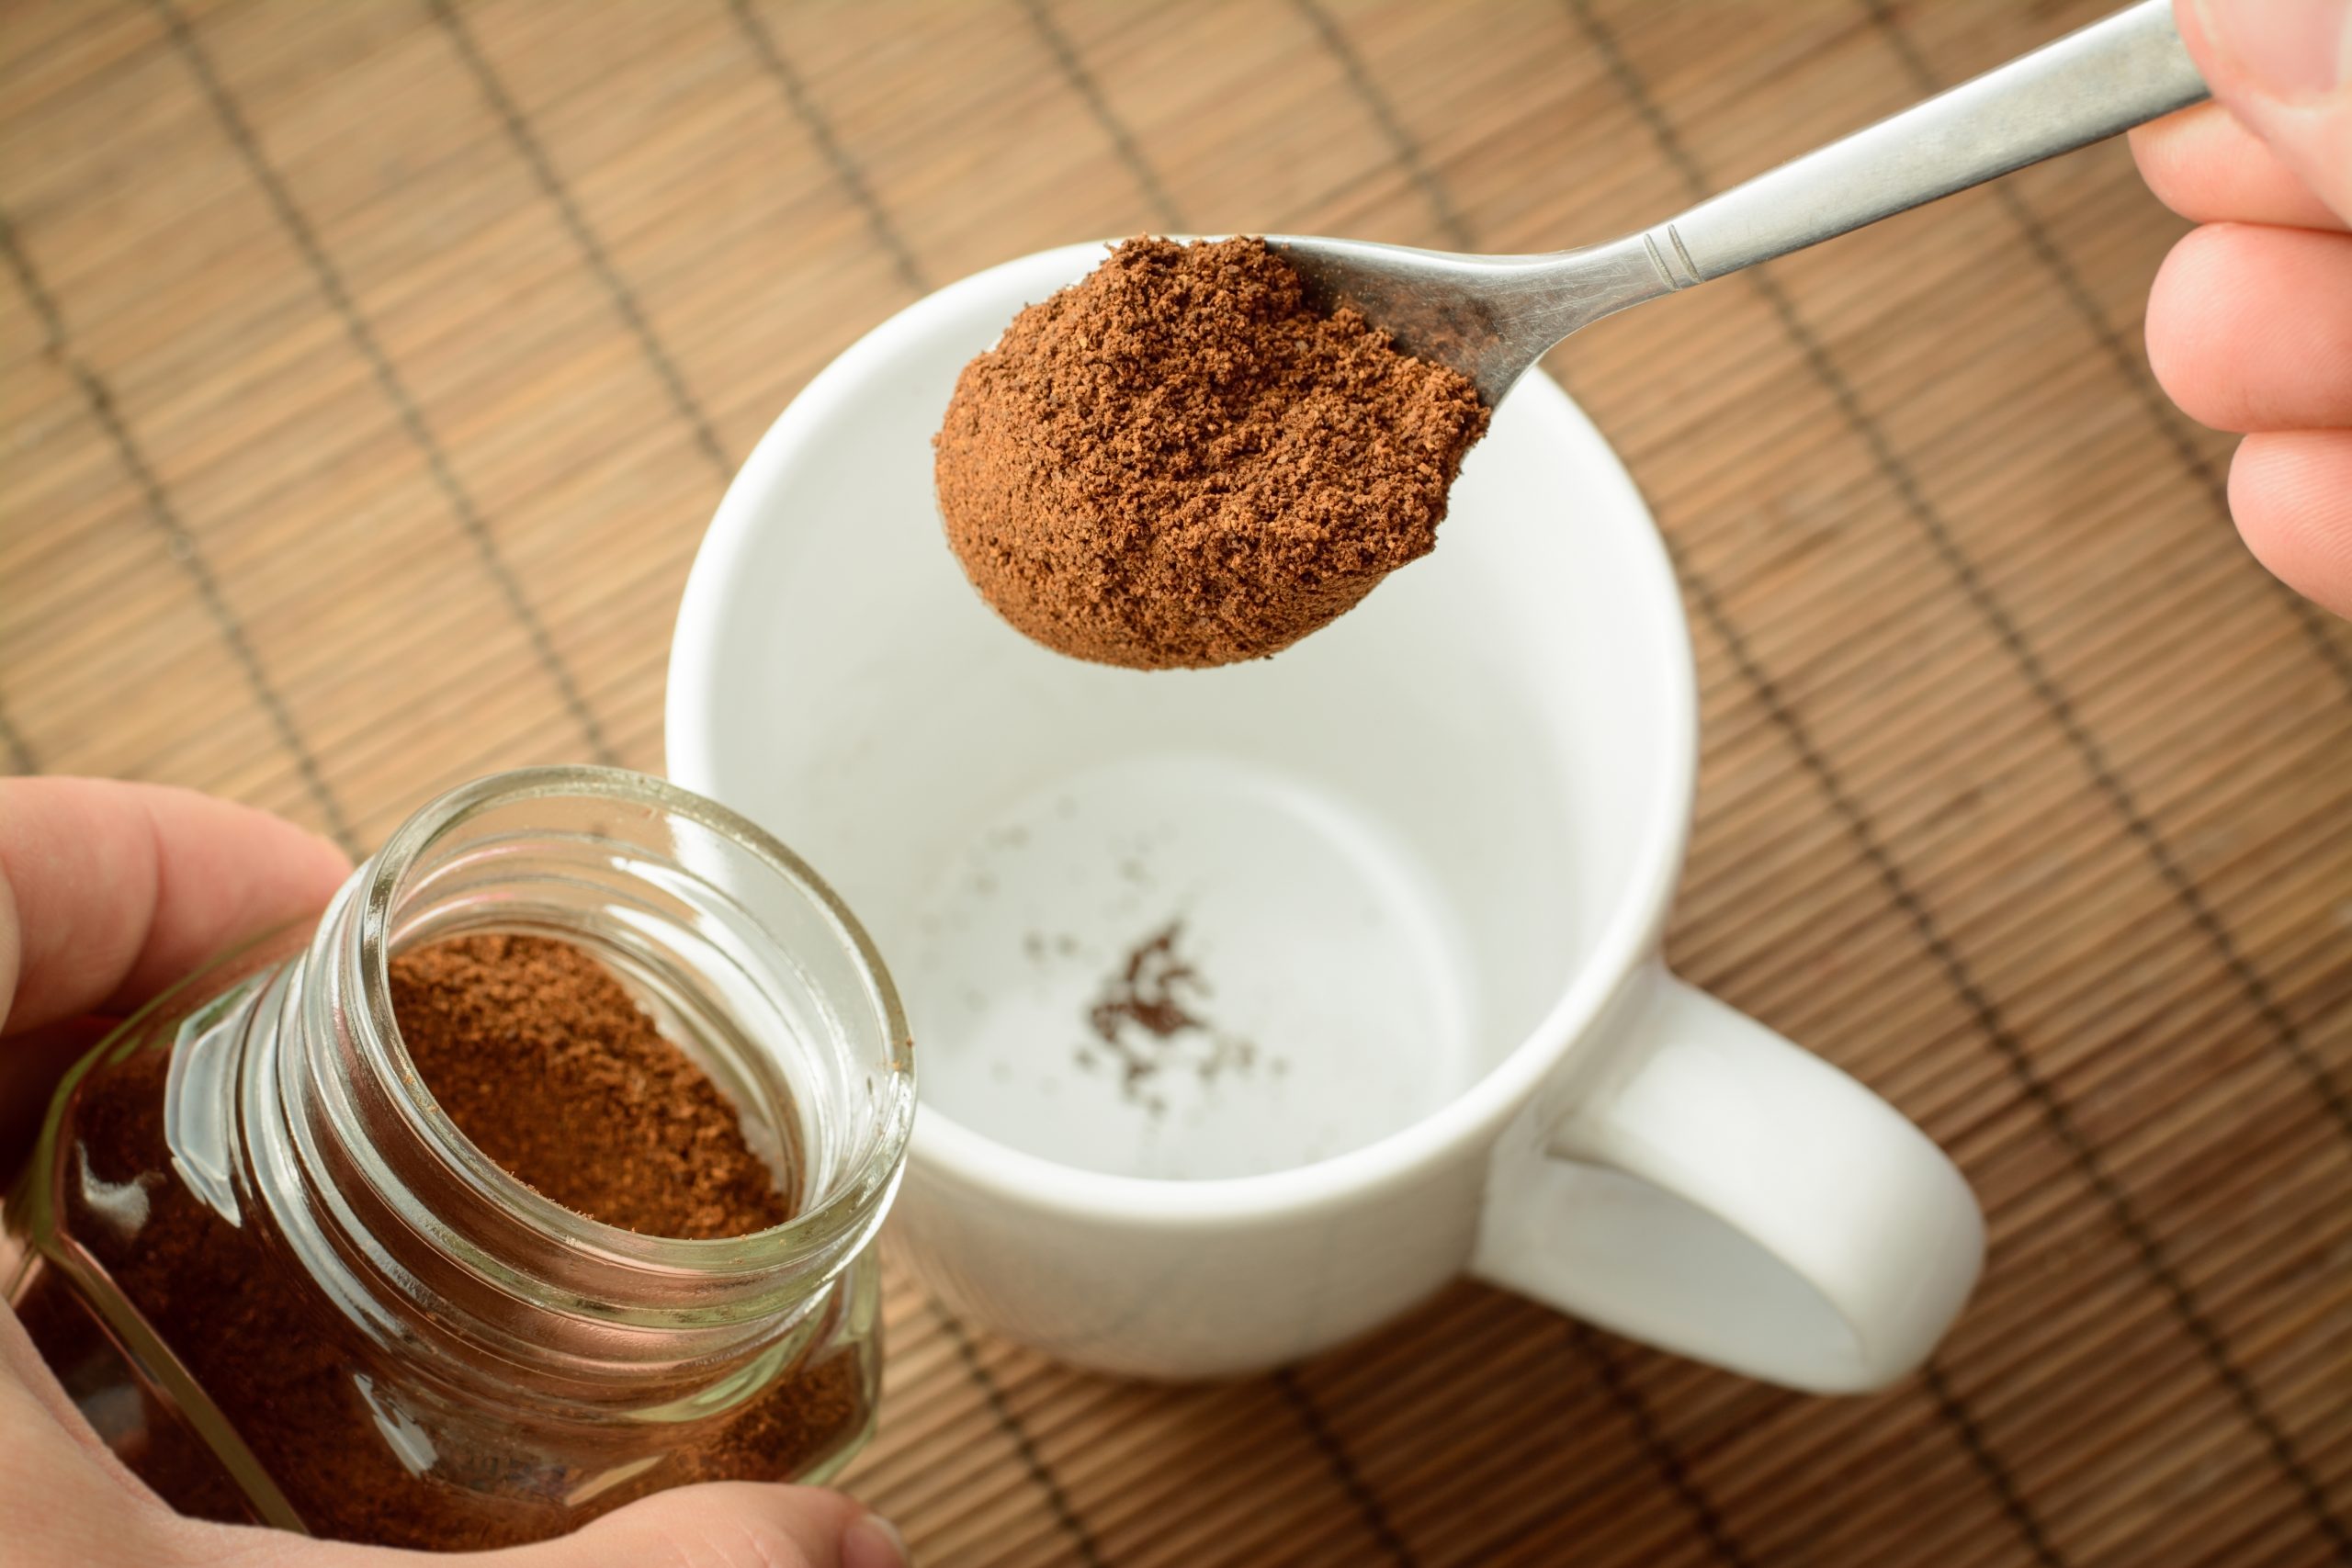 Hand pours instant coffee into a mug.